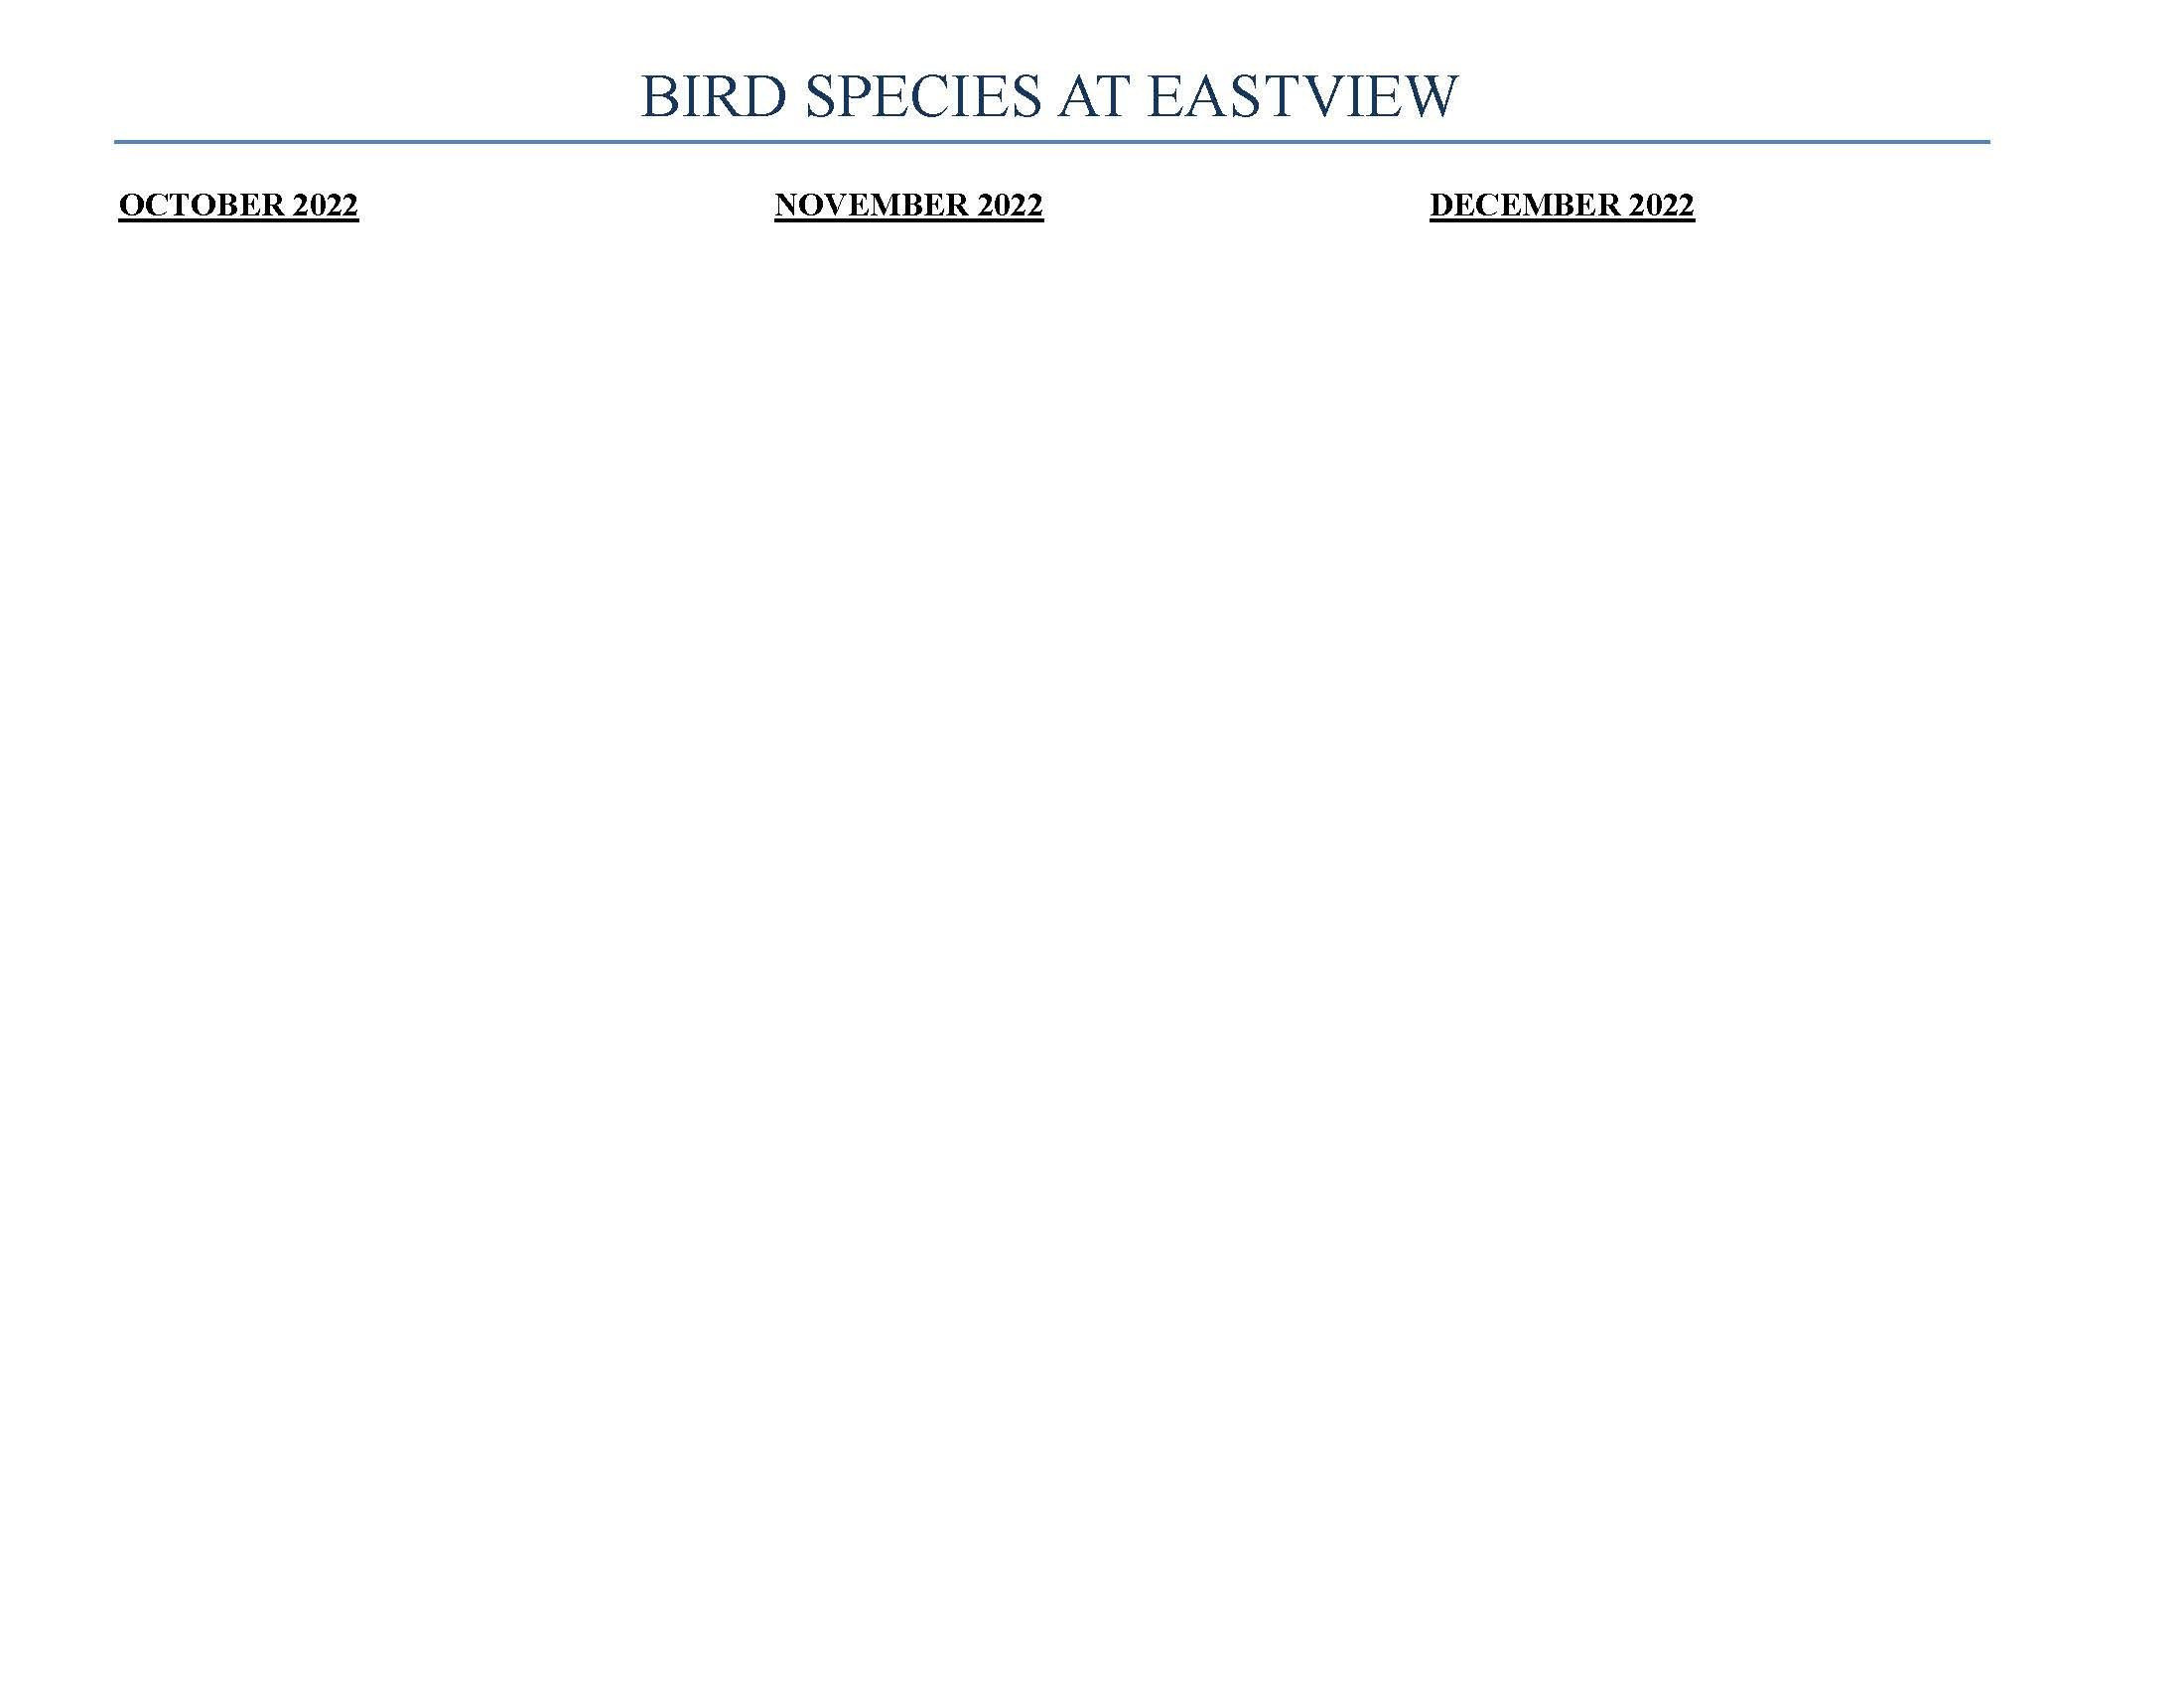 Bird Species at Eastview: Fall